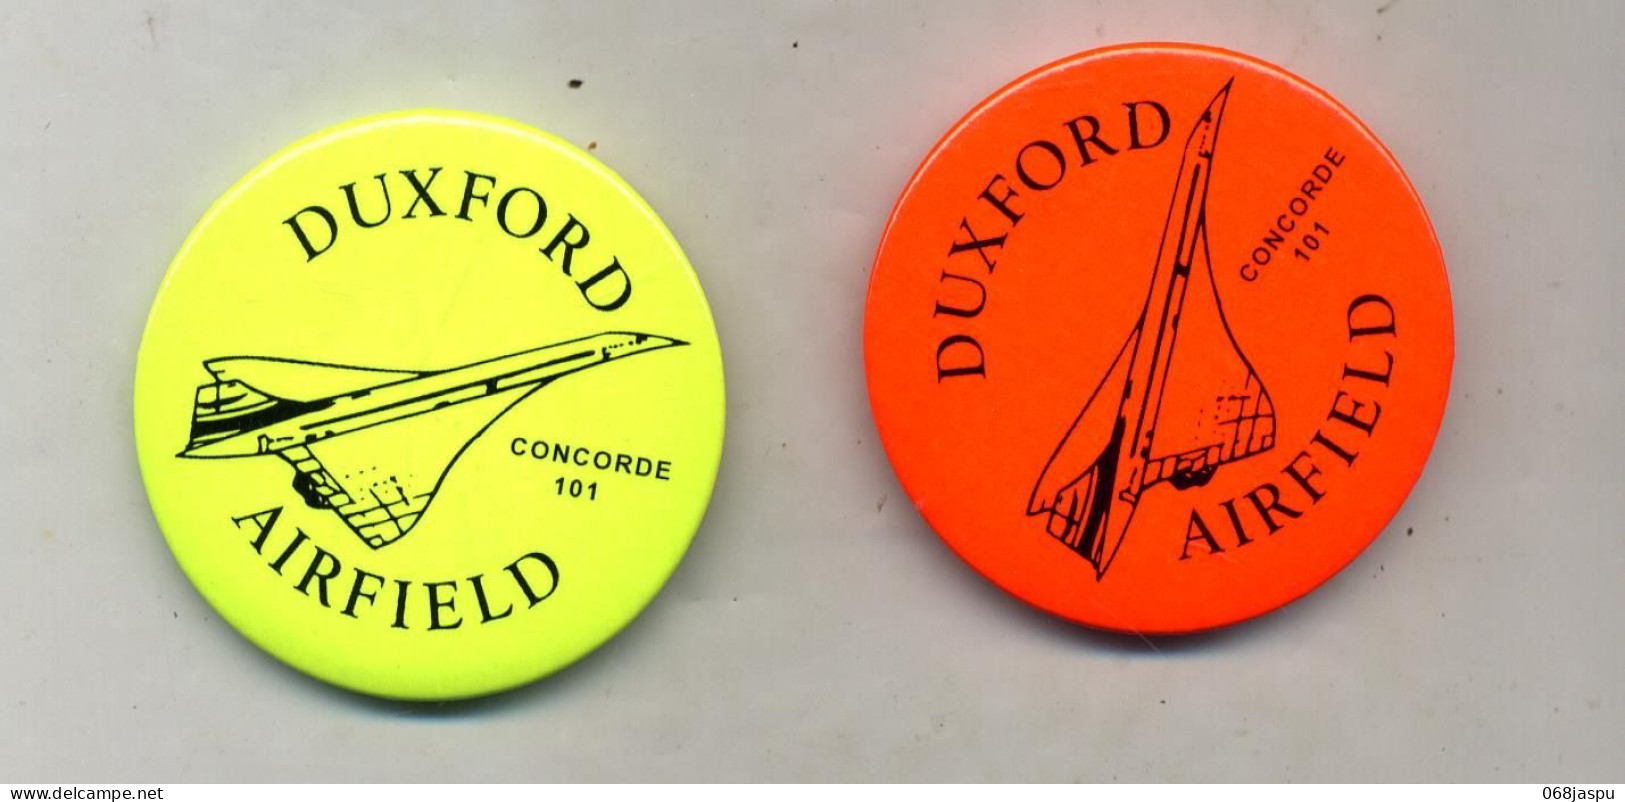 Broche Concorde Duxford Airfield - Brochen